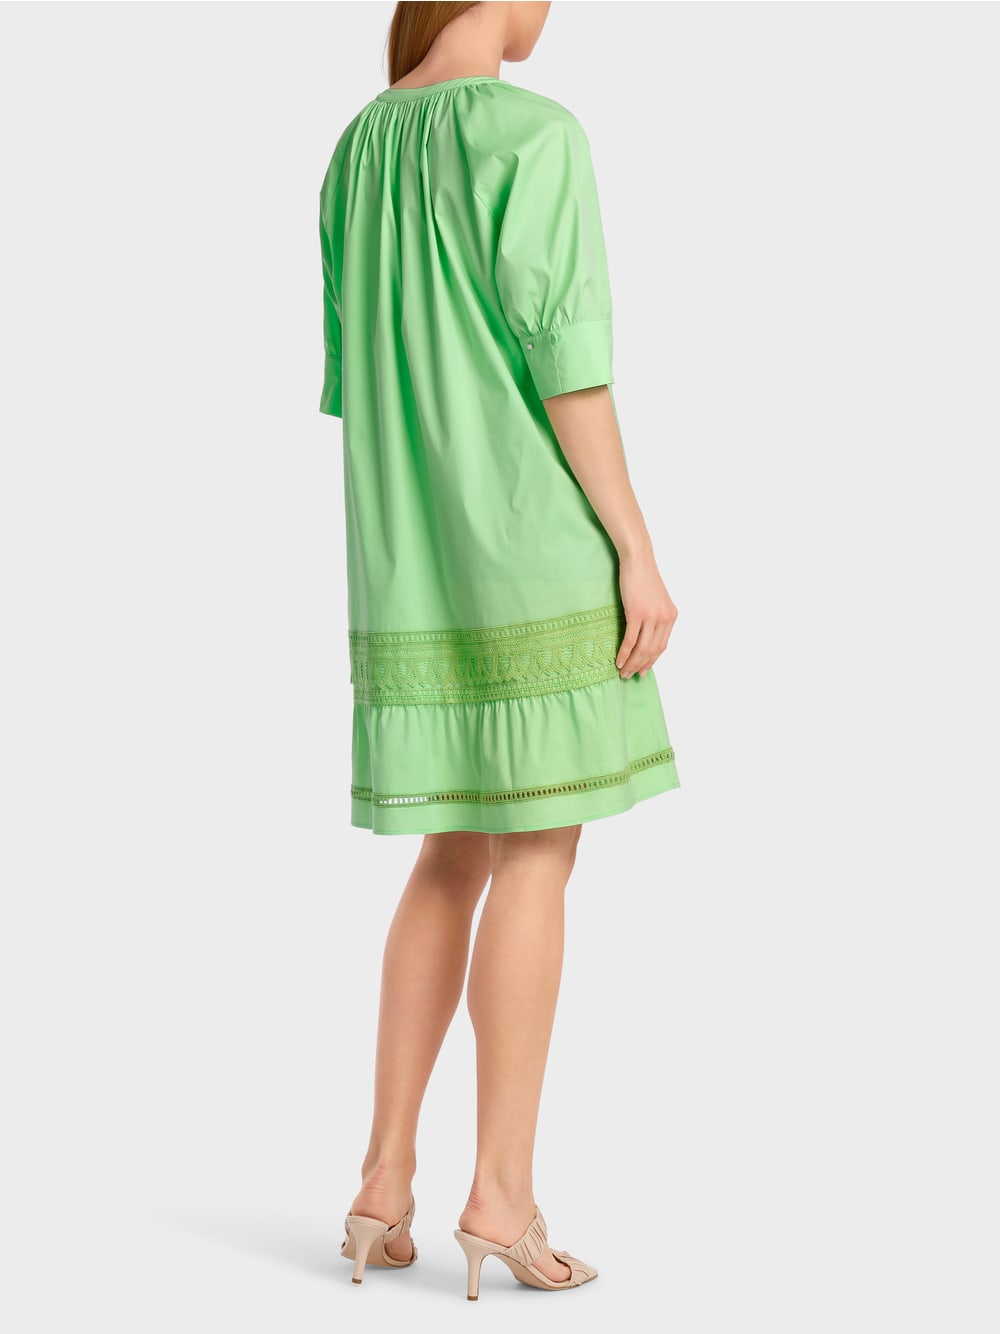 Marc Cain Light Apple Green Romantic raglan dress with tier